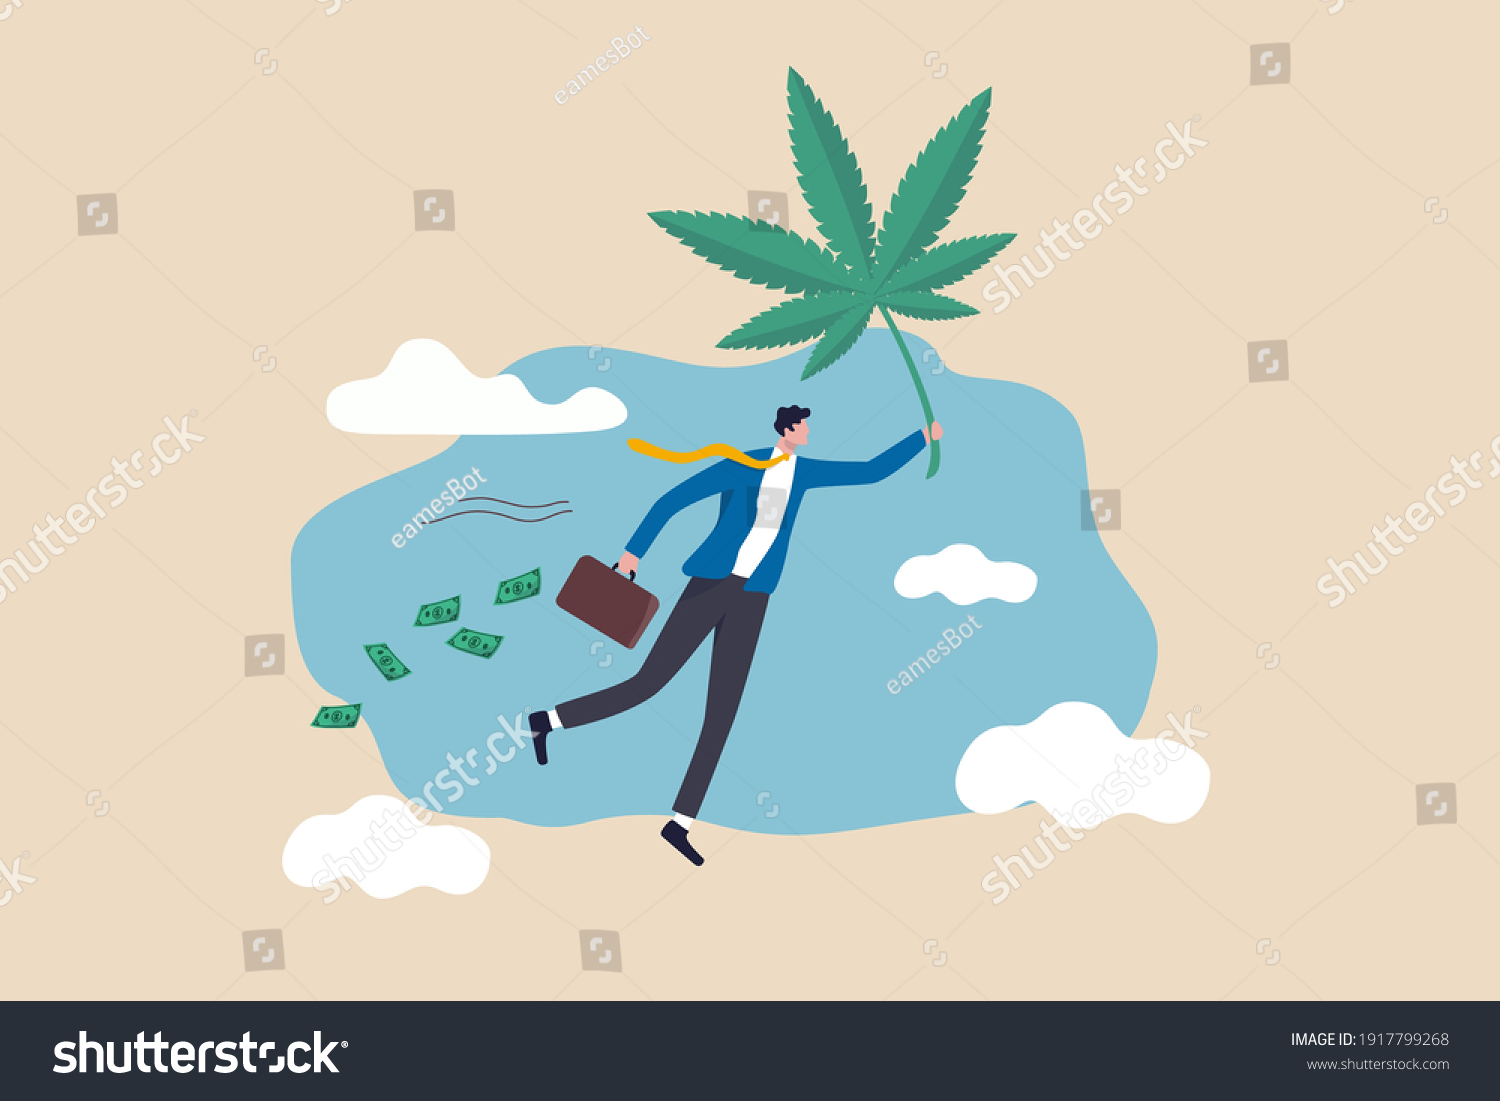 Marijuana stocks Images, Stock Photos & Vectors | Shutterstock